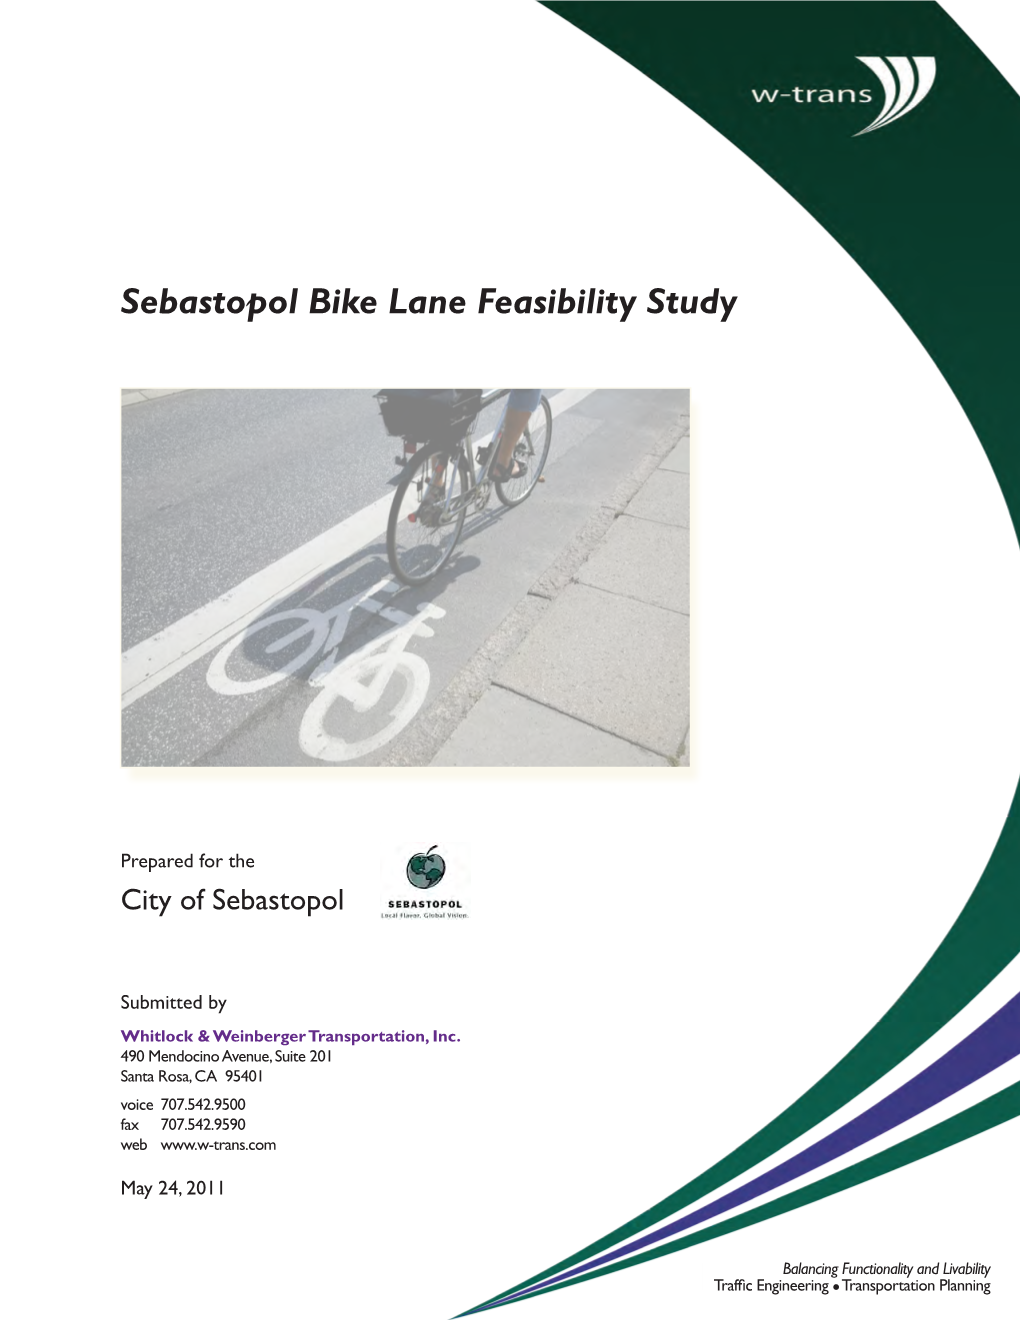 Bike Lane Feasibility Study